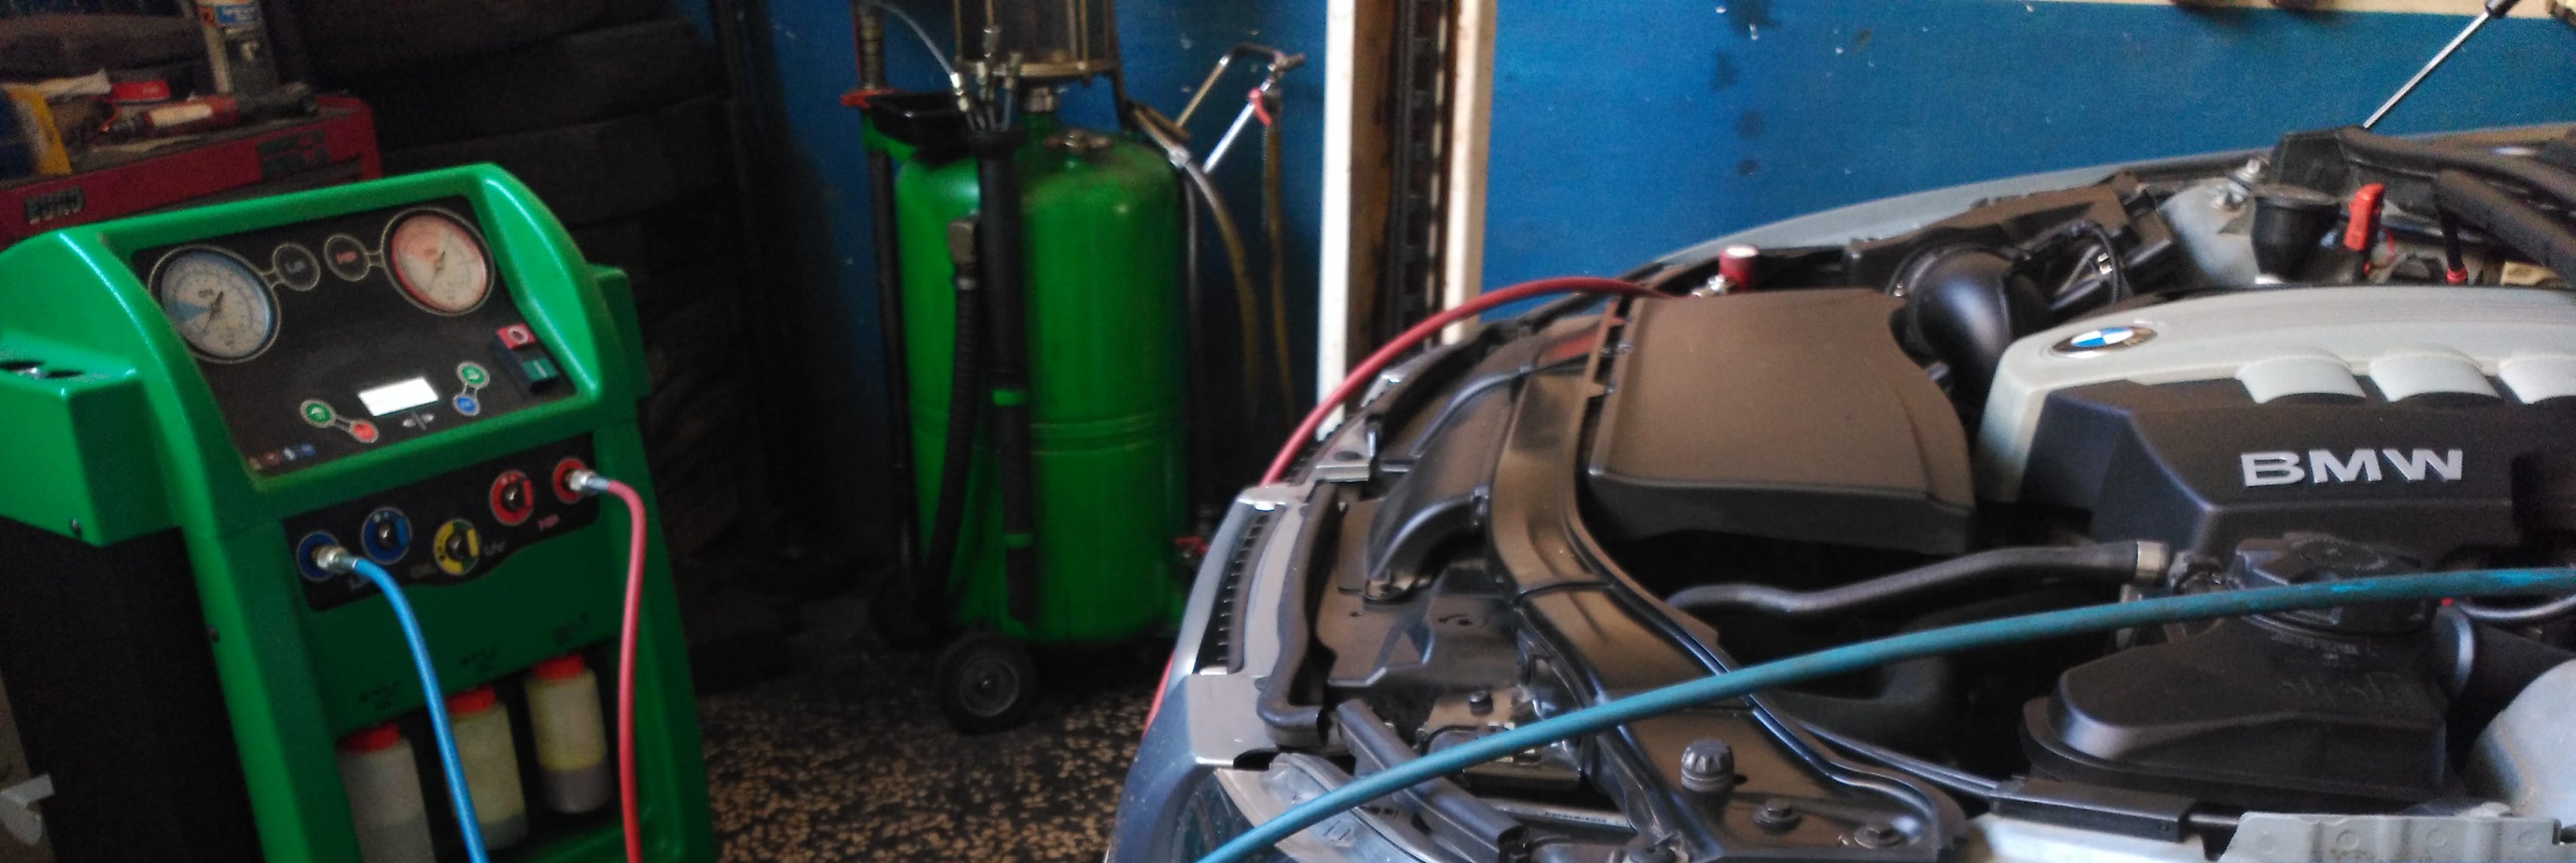 Foto de estación de carga de gas para aire-acondicionedo conectada a un vehículo.